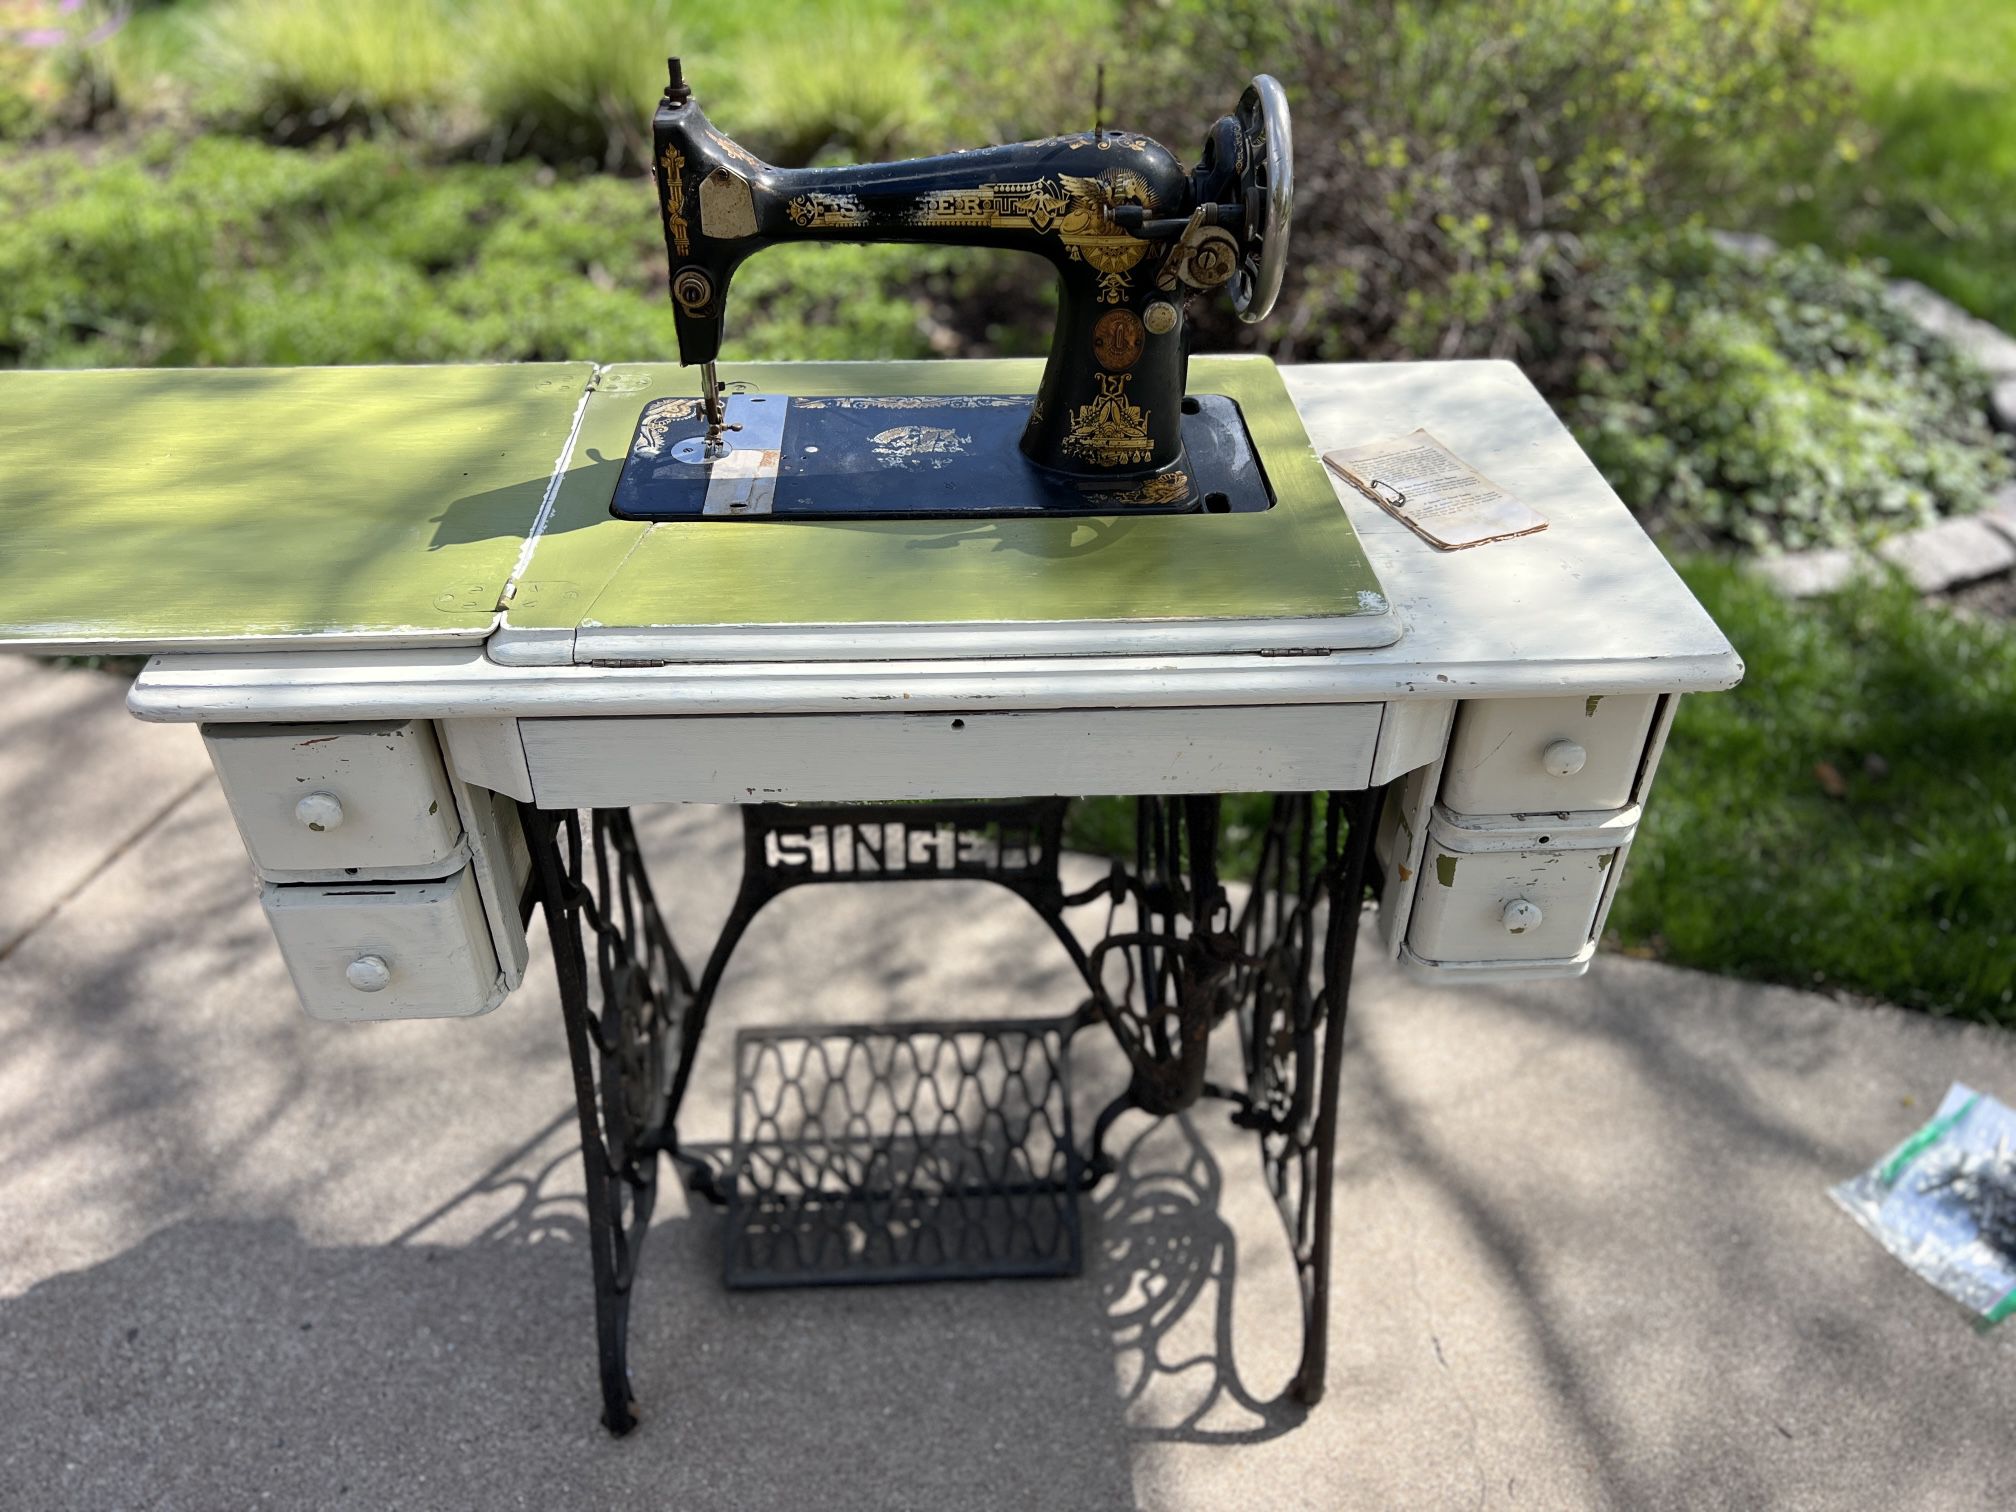 Vintage Singer Sewing Machine in table